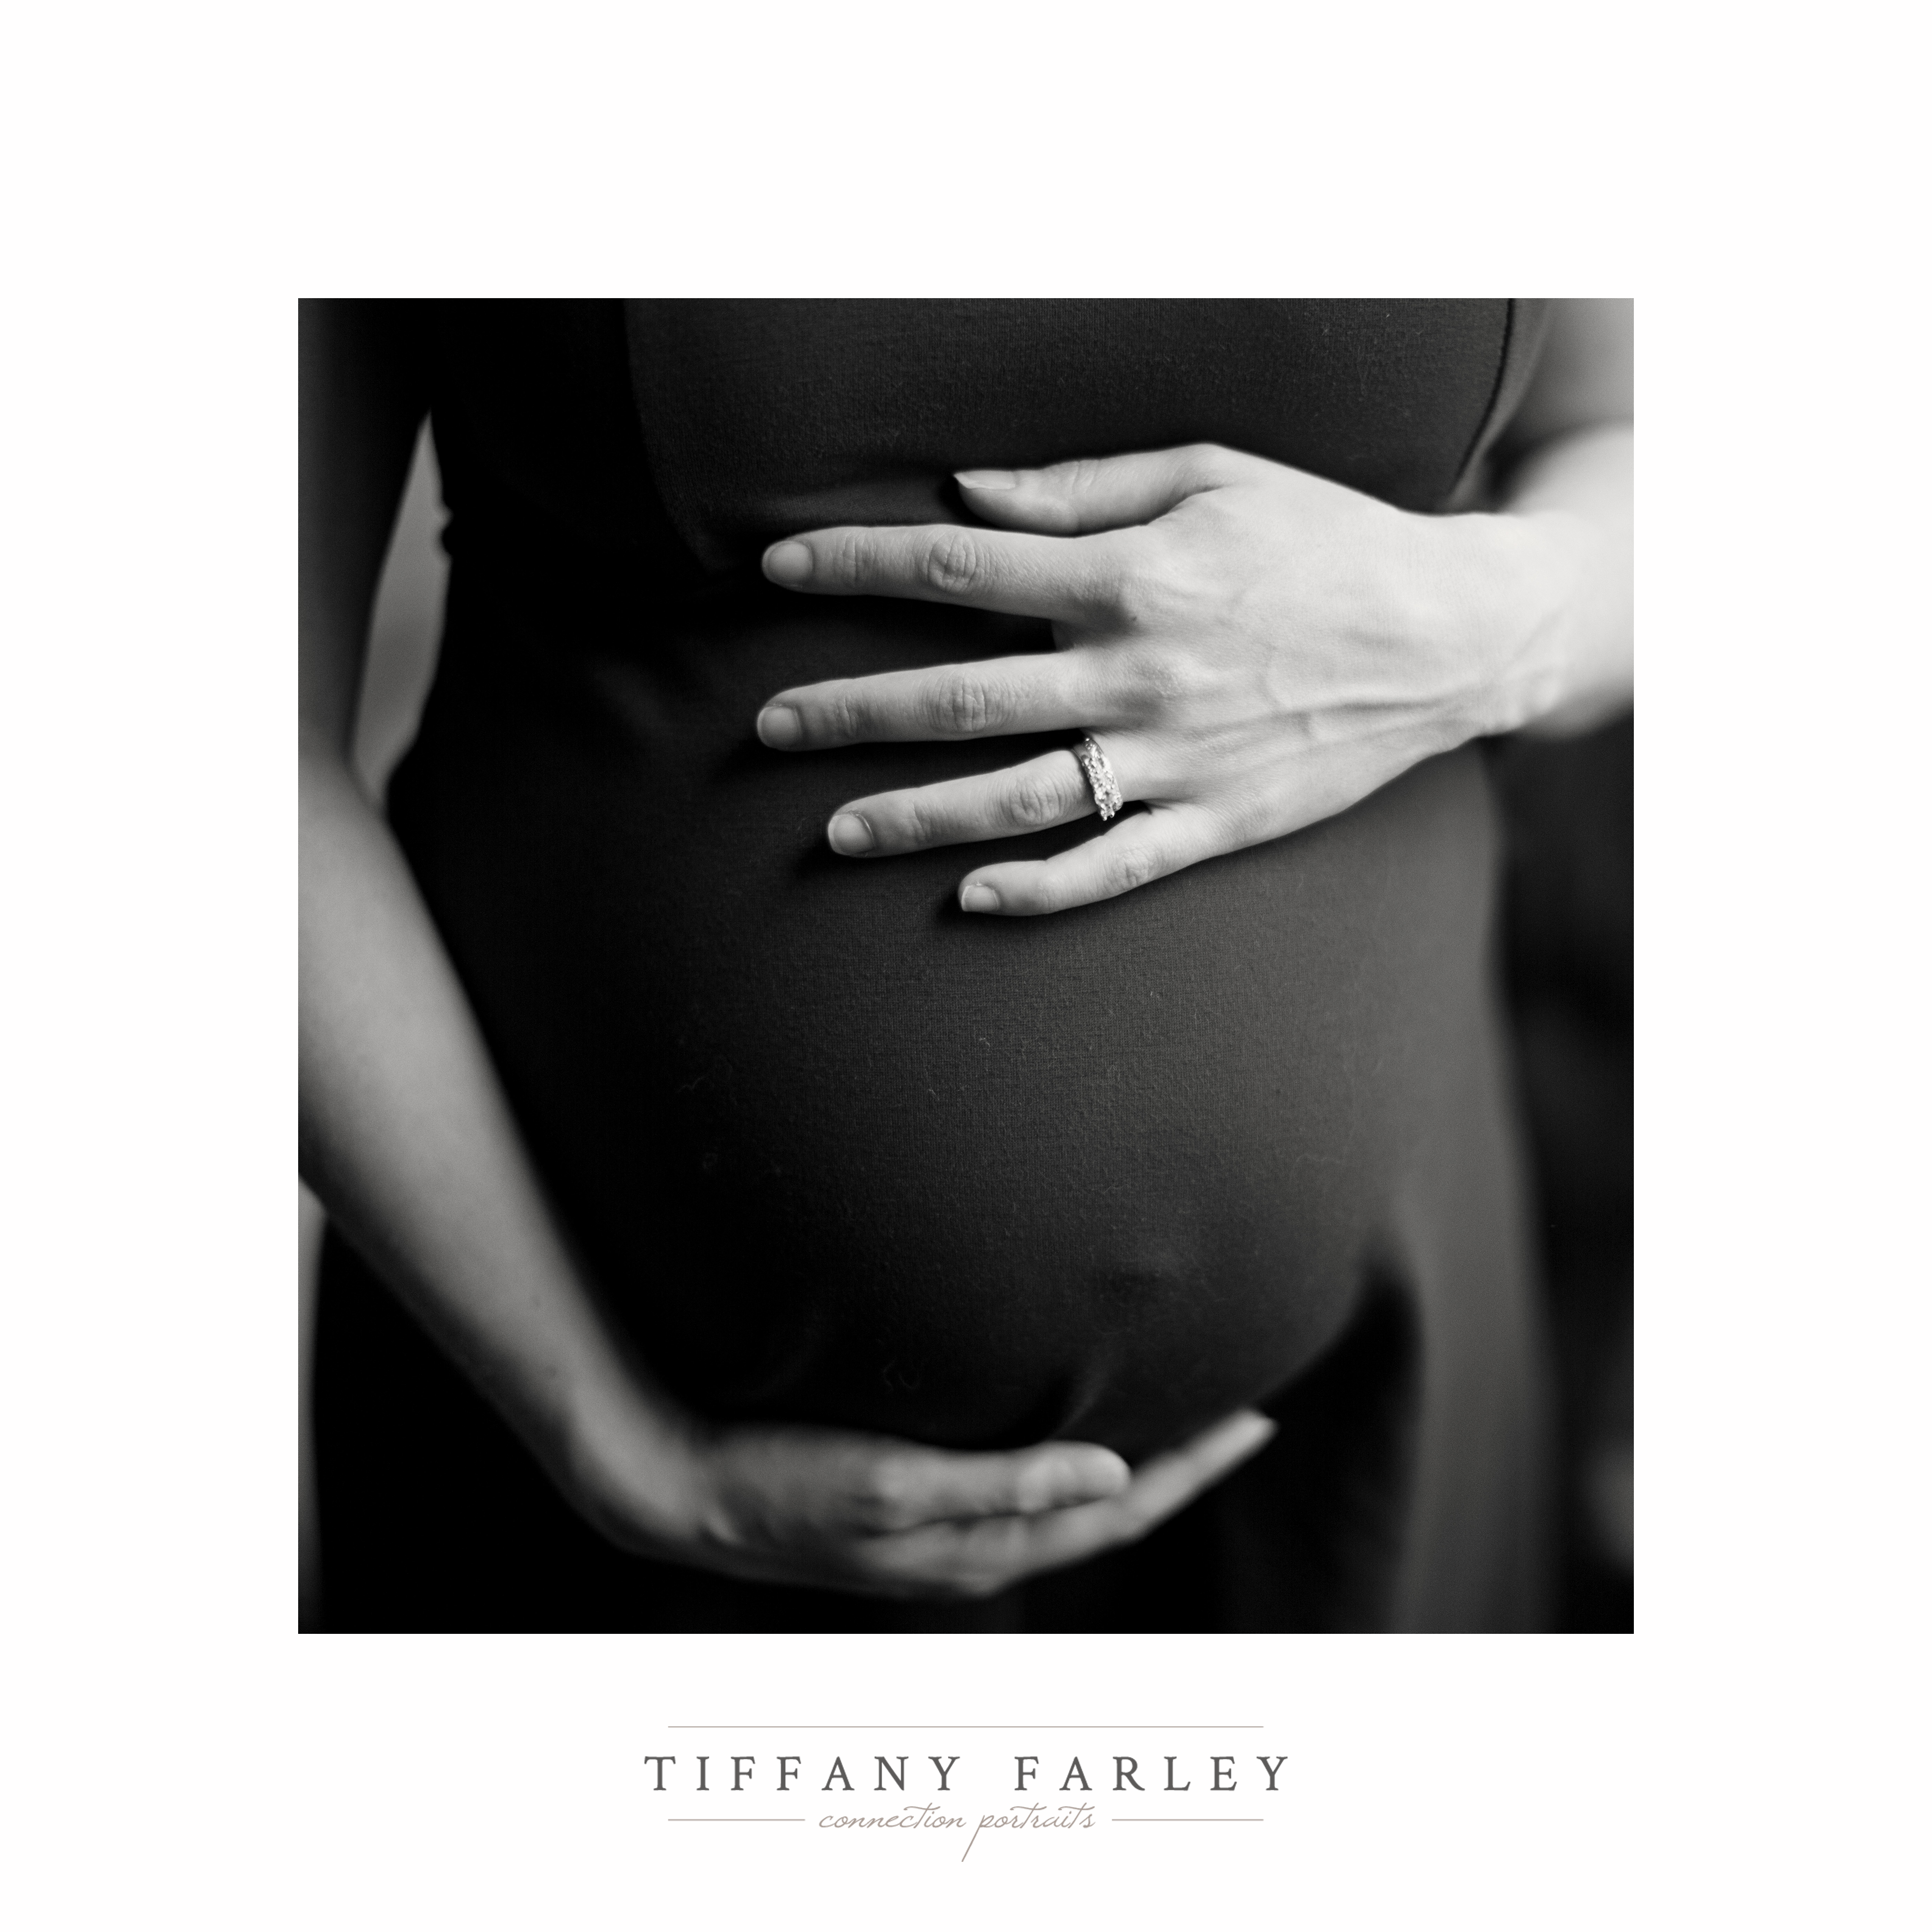 Portland Maine Pregnancy, Maternity, Newborn, and Baby Photographer Tiffany Farley, view more at http://tiffanyfarley.com